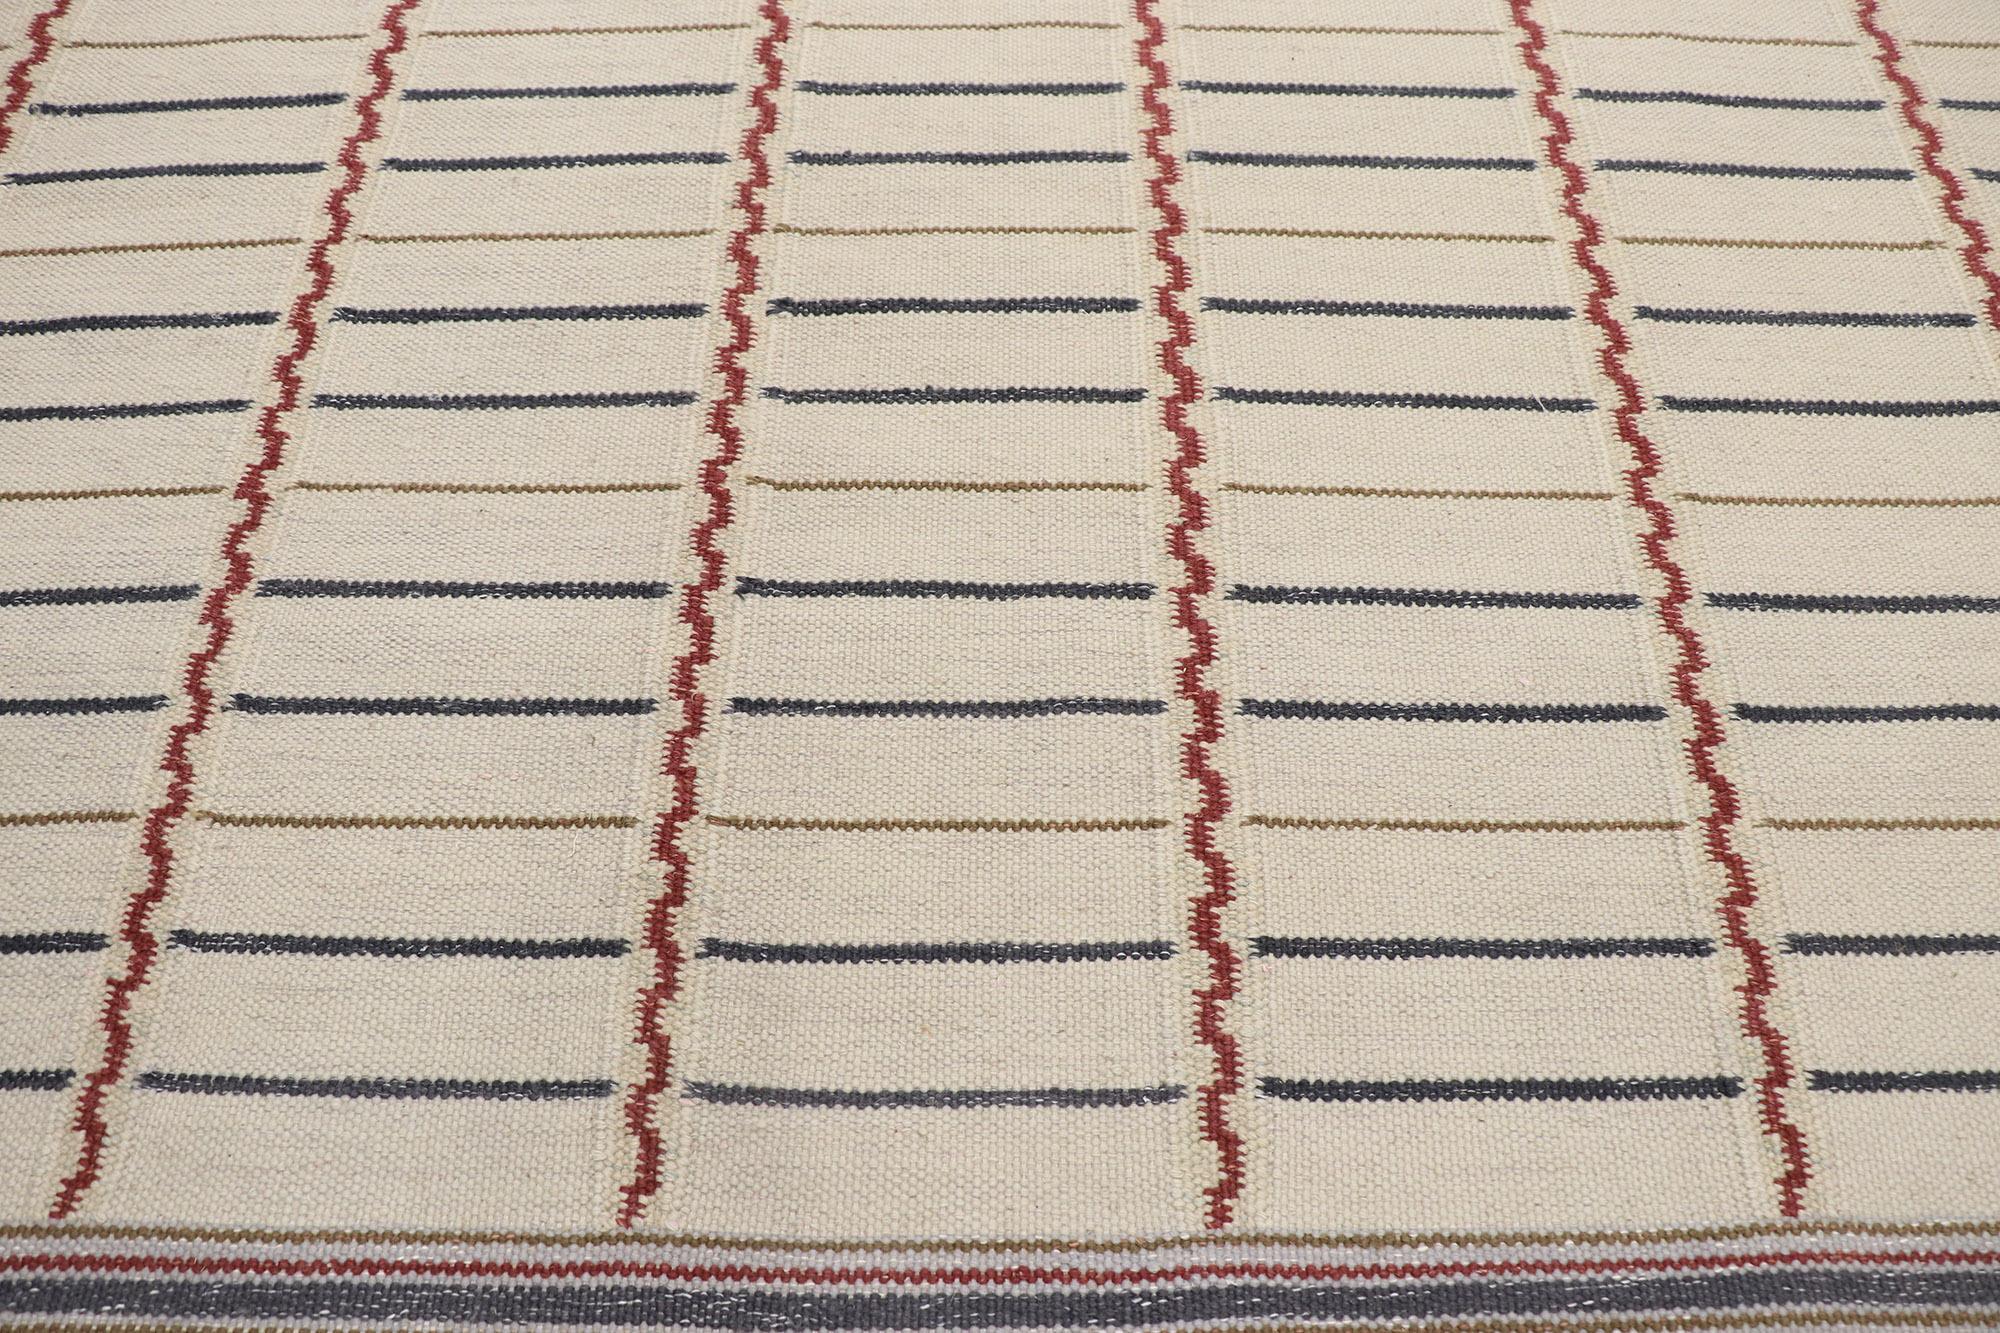 Hand-Woven New Swedish Inspired Kilim Rug with Scandinavian Modern Style